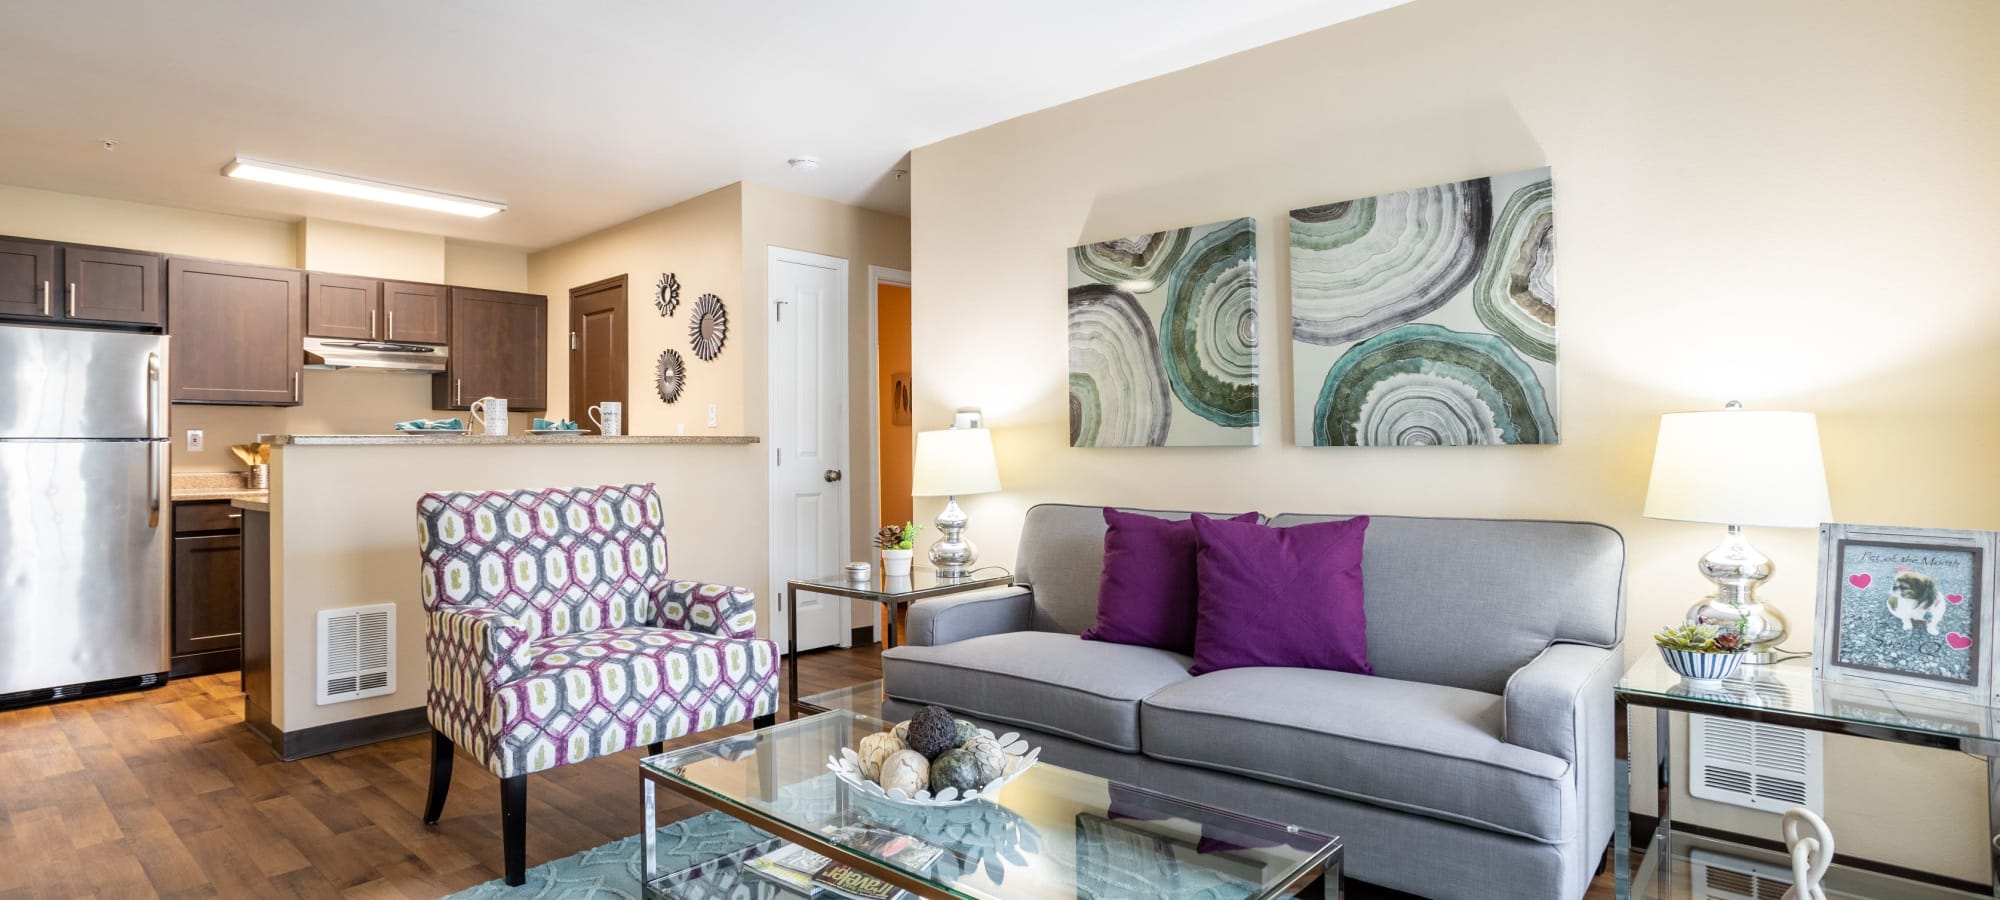 Renton, Washington apartments at Pebble Cove Apartments